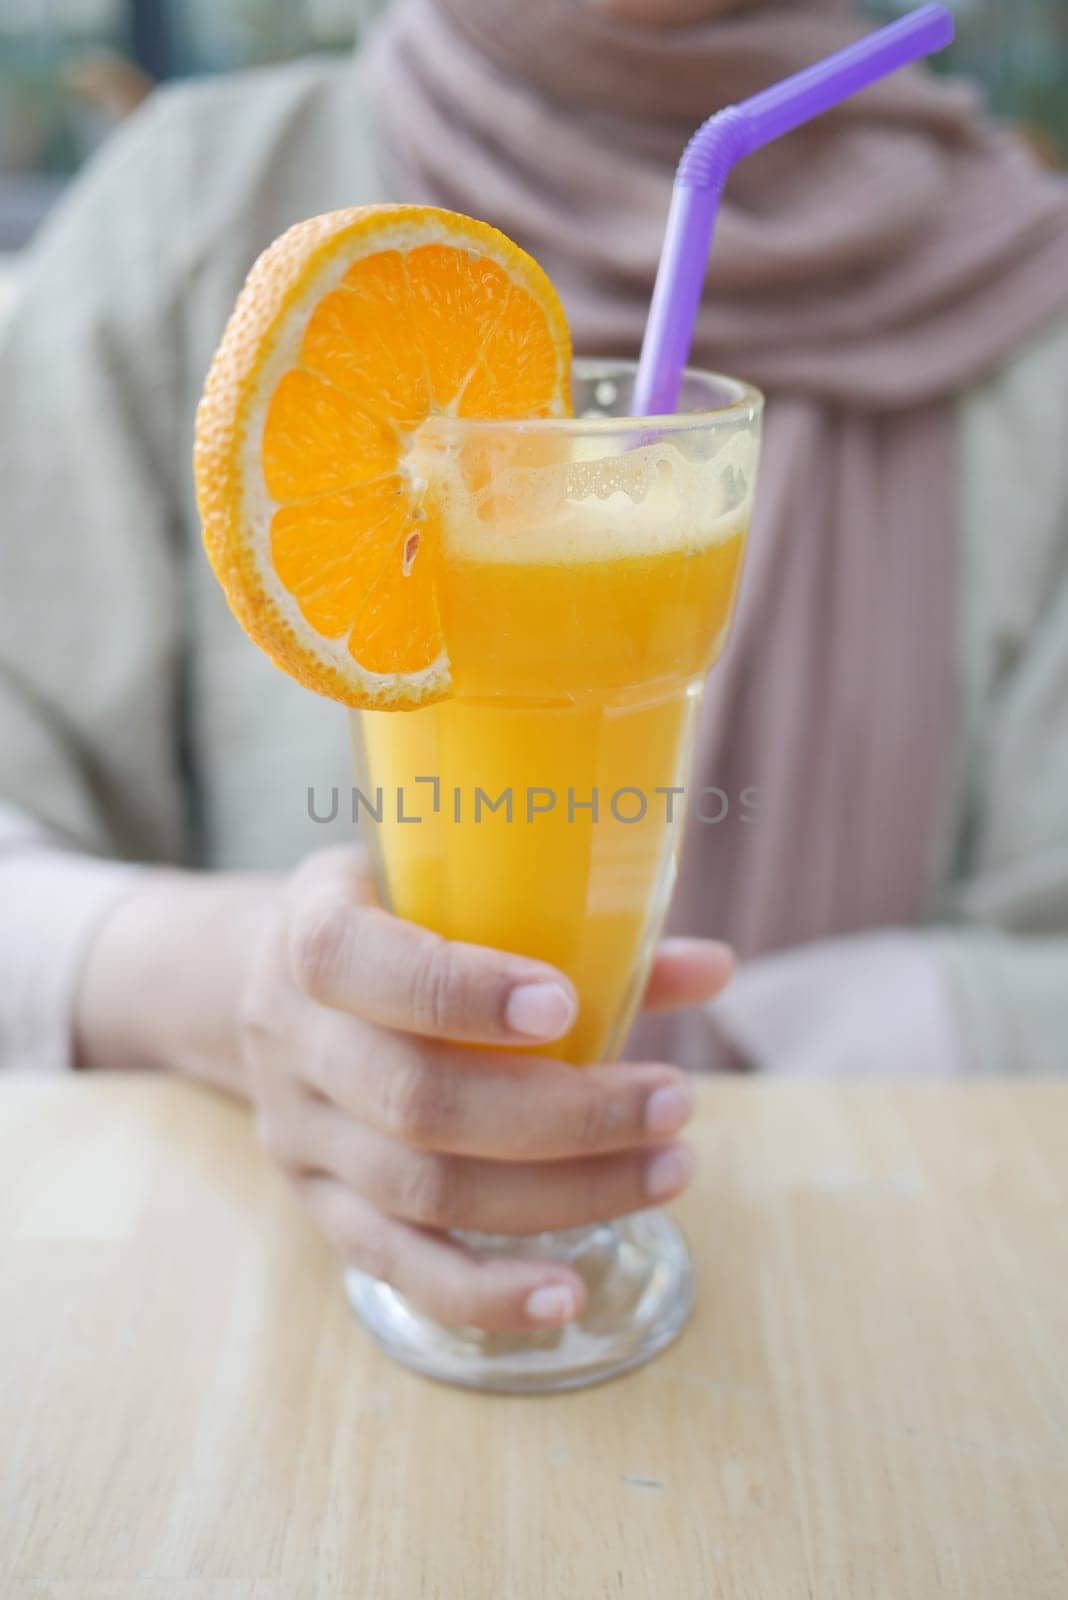 holding a glass of orange juice close up ,